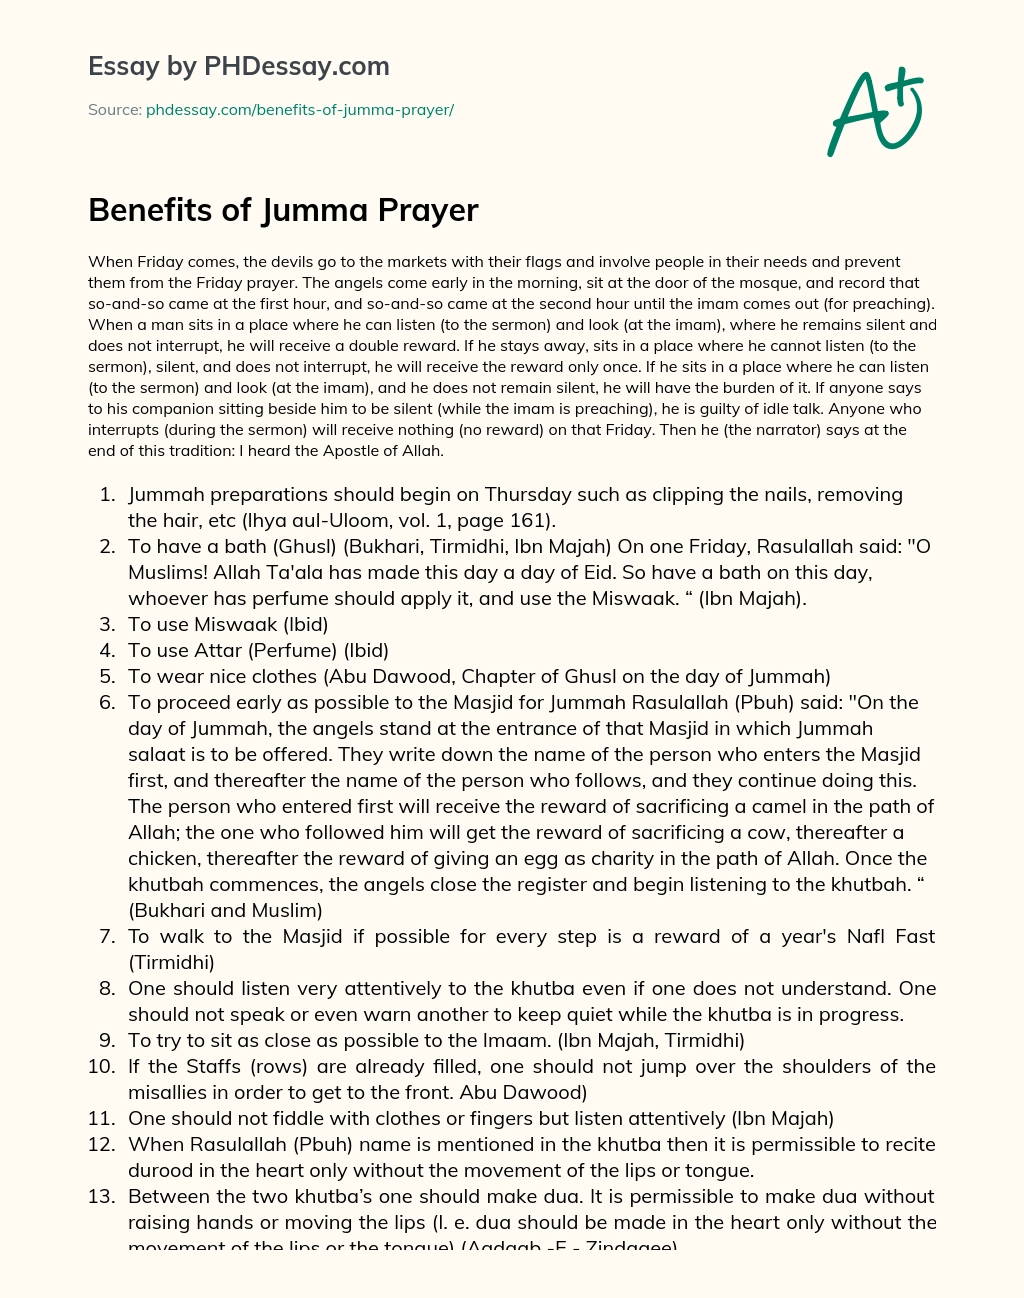 essay on importance of jummah